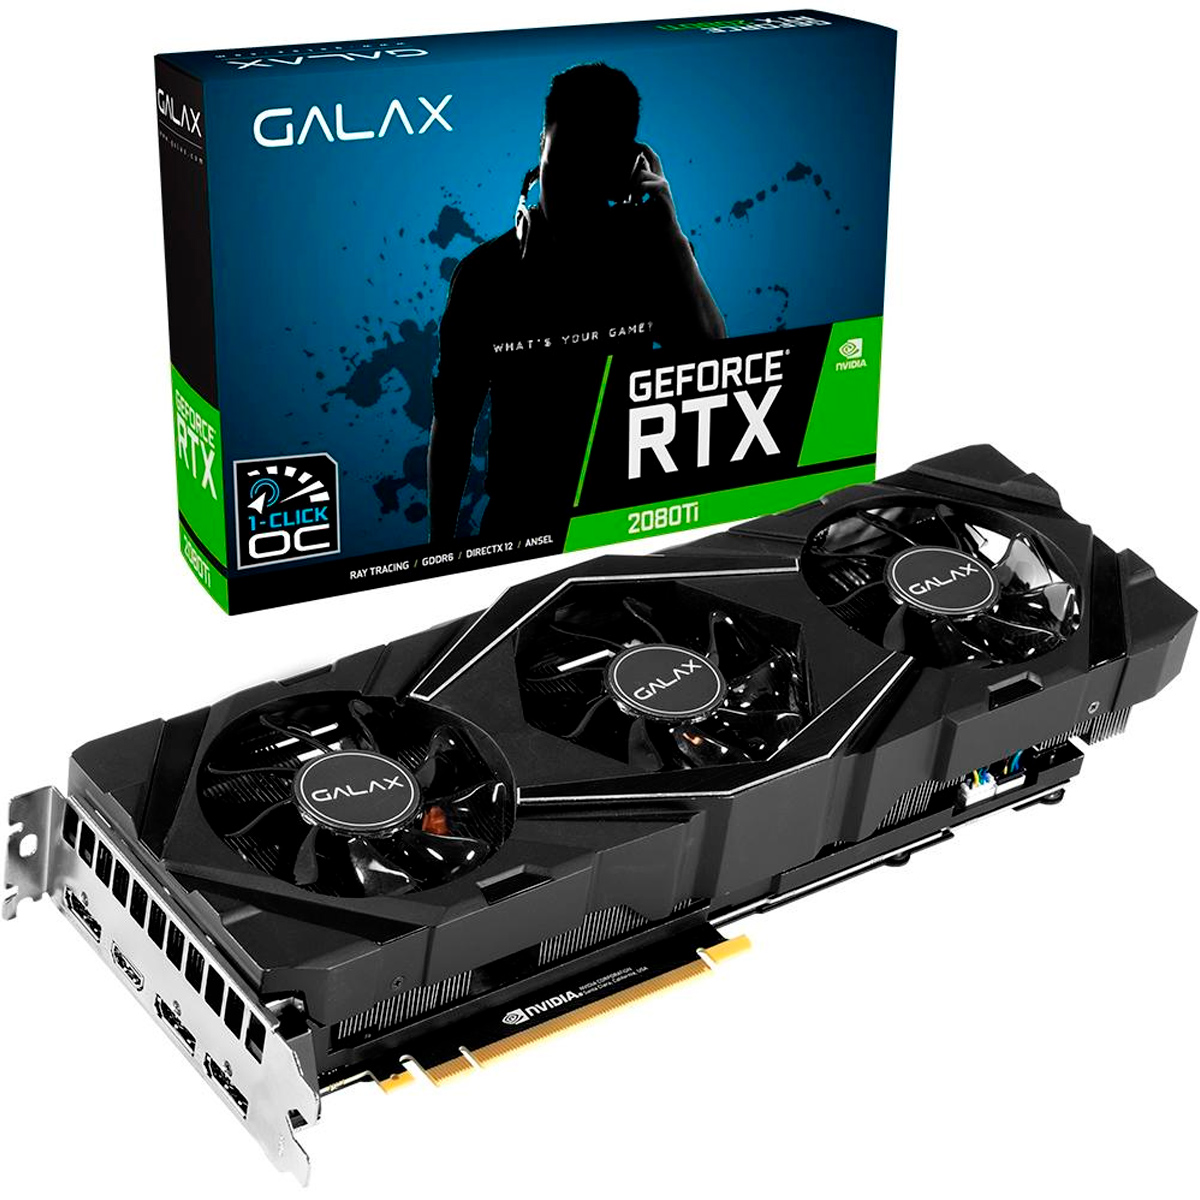 GeForce RTX 2080 Ti 11GB GDDR6 352bits - 1-Click OC - SG Edition v2 - Galax 28IULBMDT22G